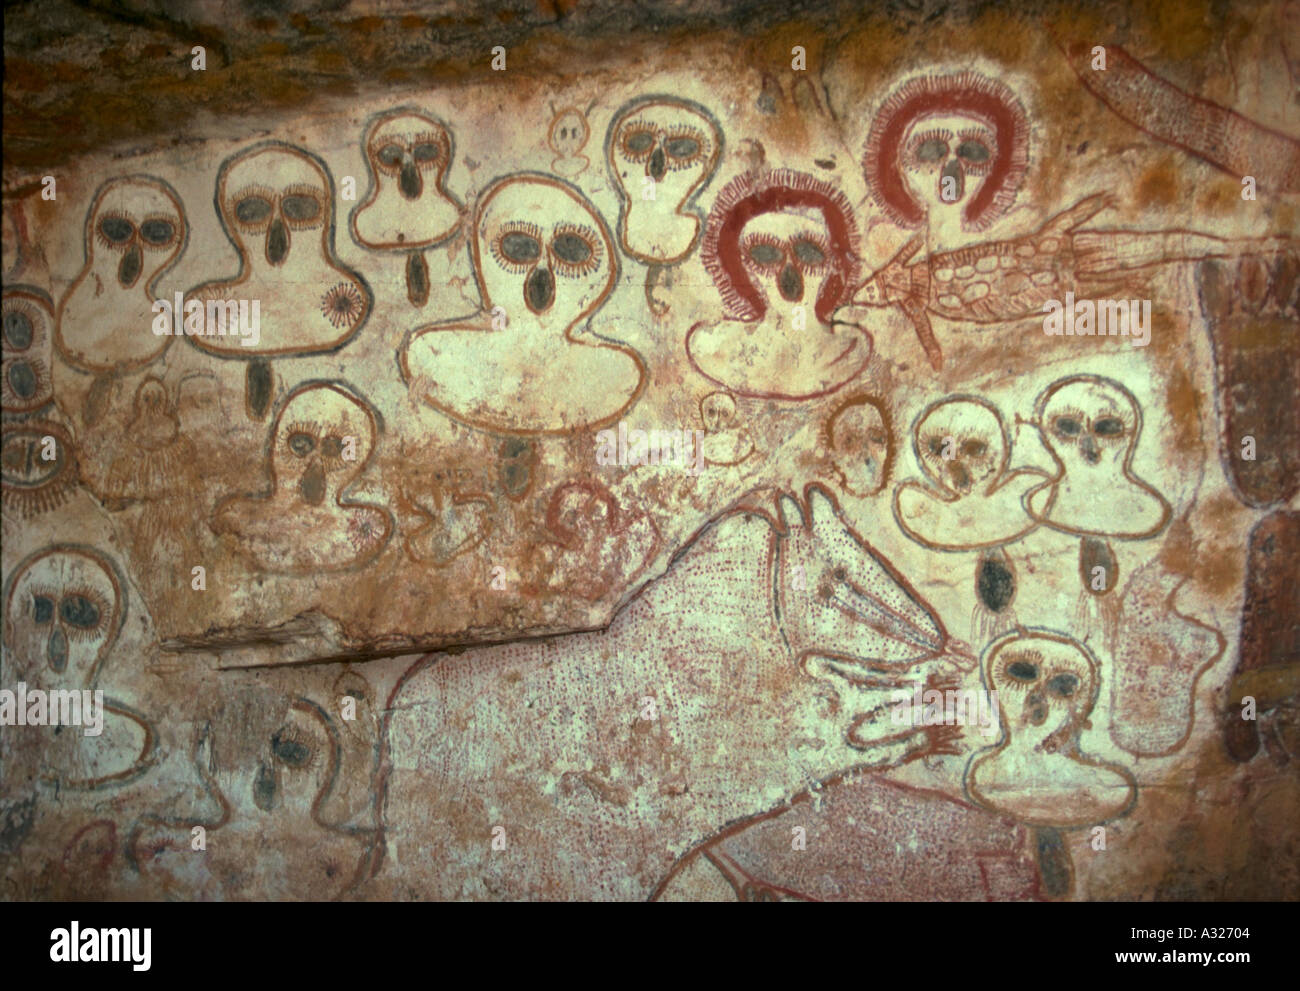 Australian Aboriginal Cave Paintings - Painting Inspired